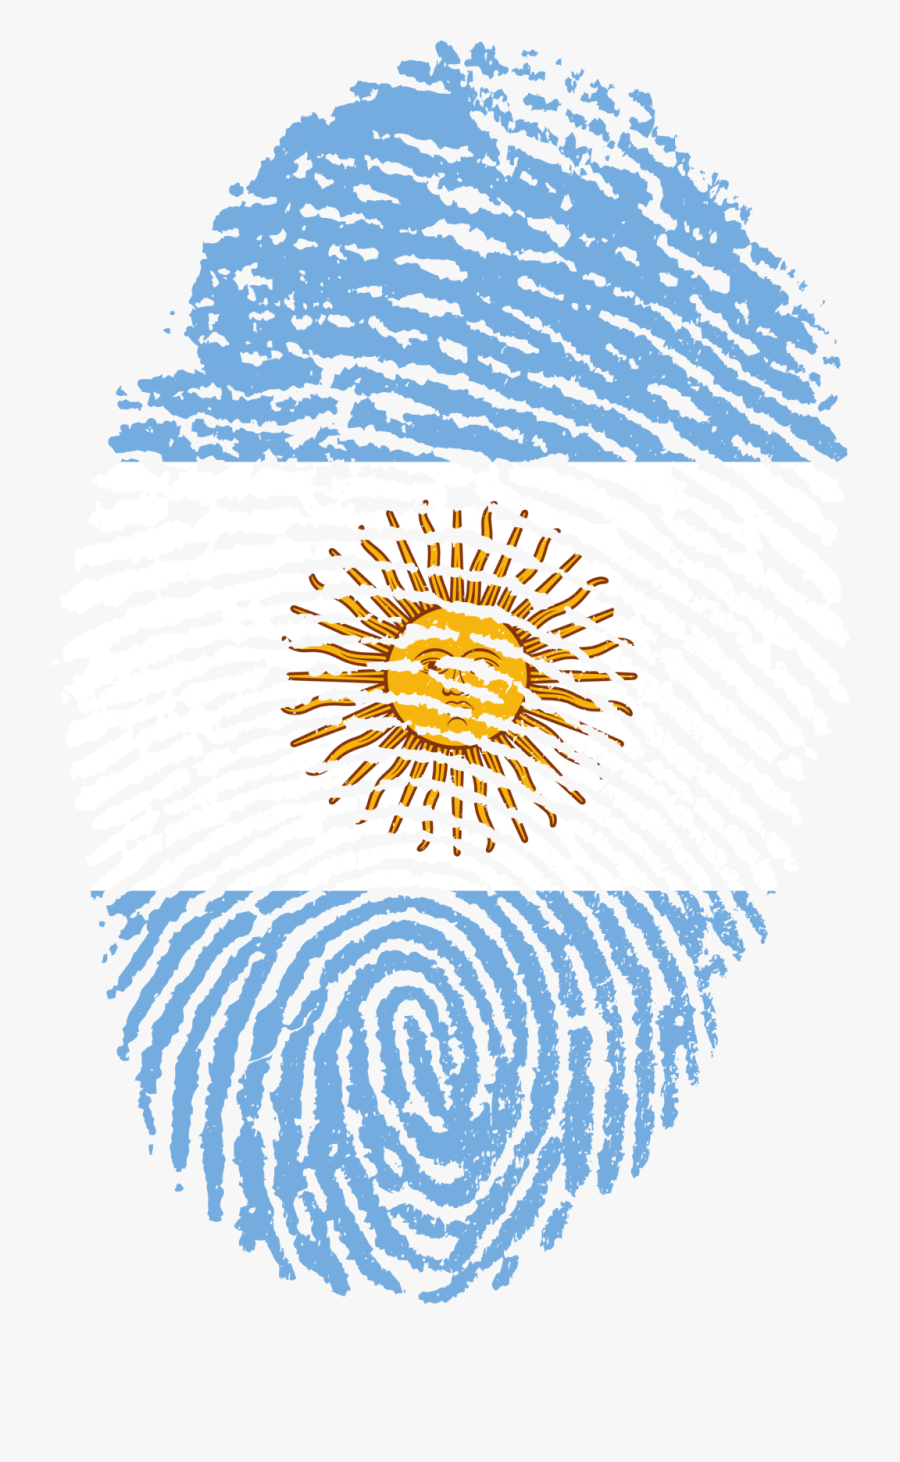 #fingerprint #argentina #flag #football #soccer #worldcup - Challenges Of Digital India, Transparent Clipart